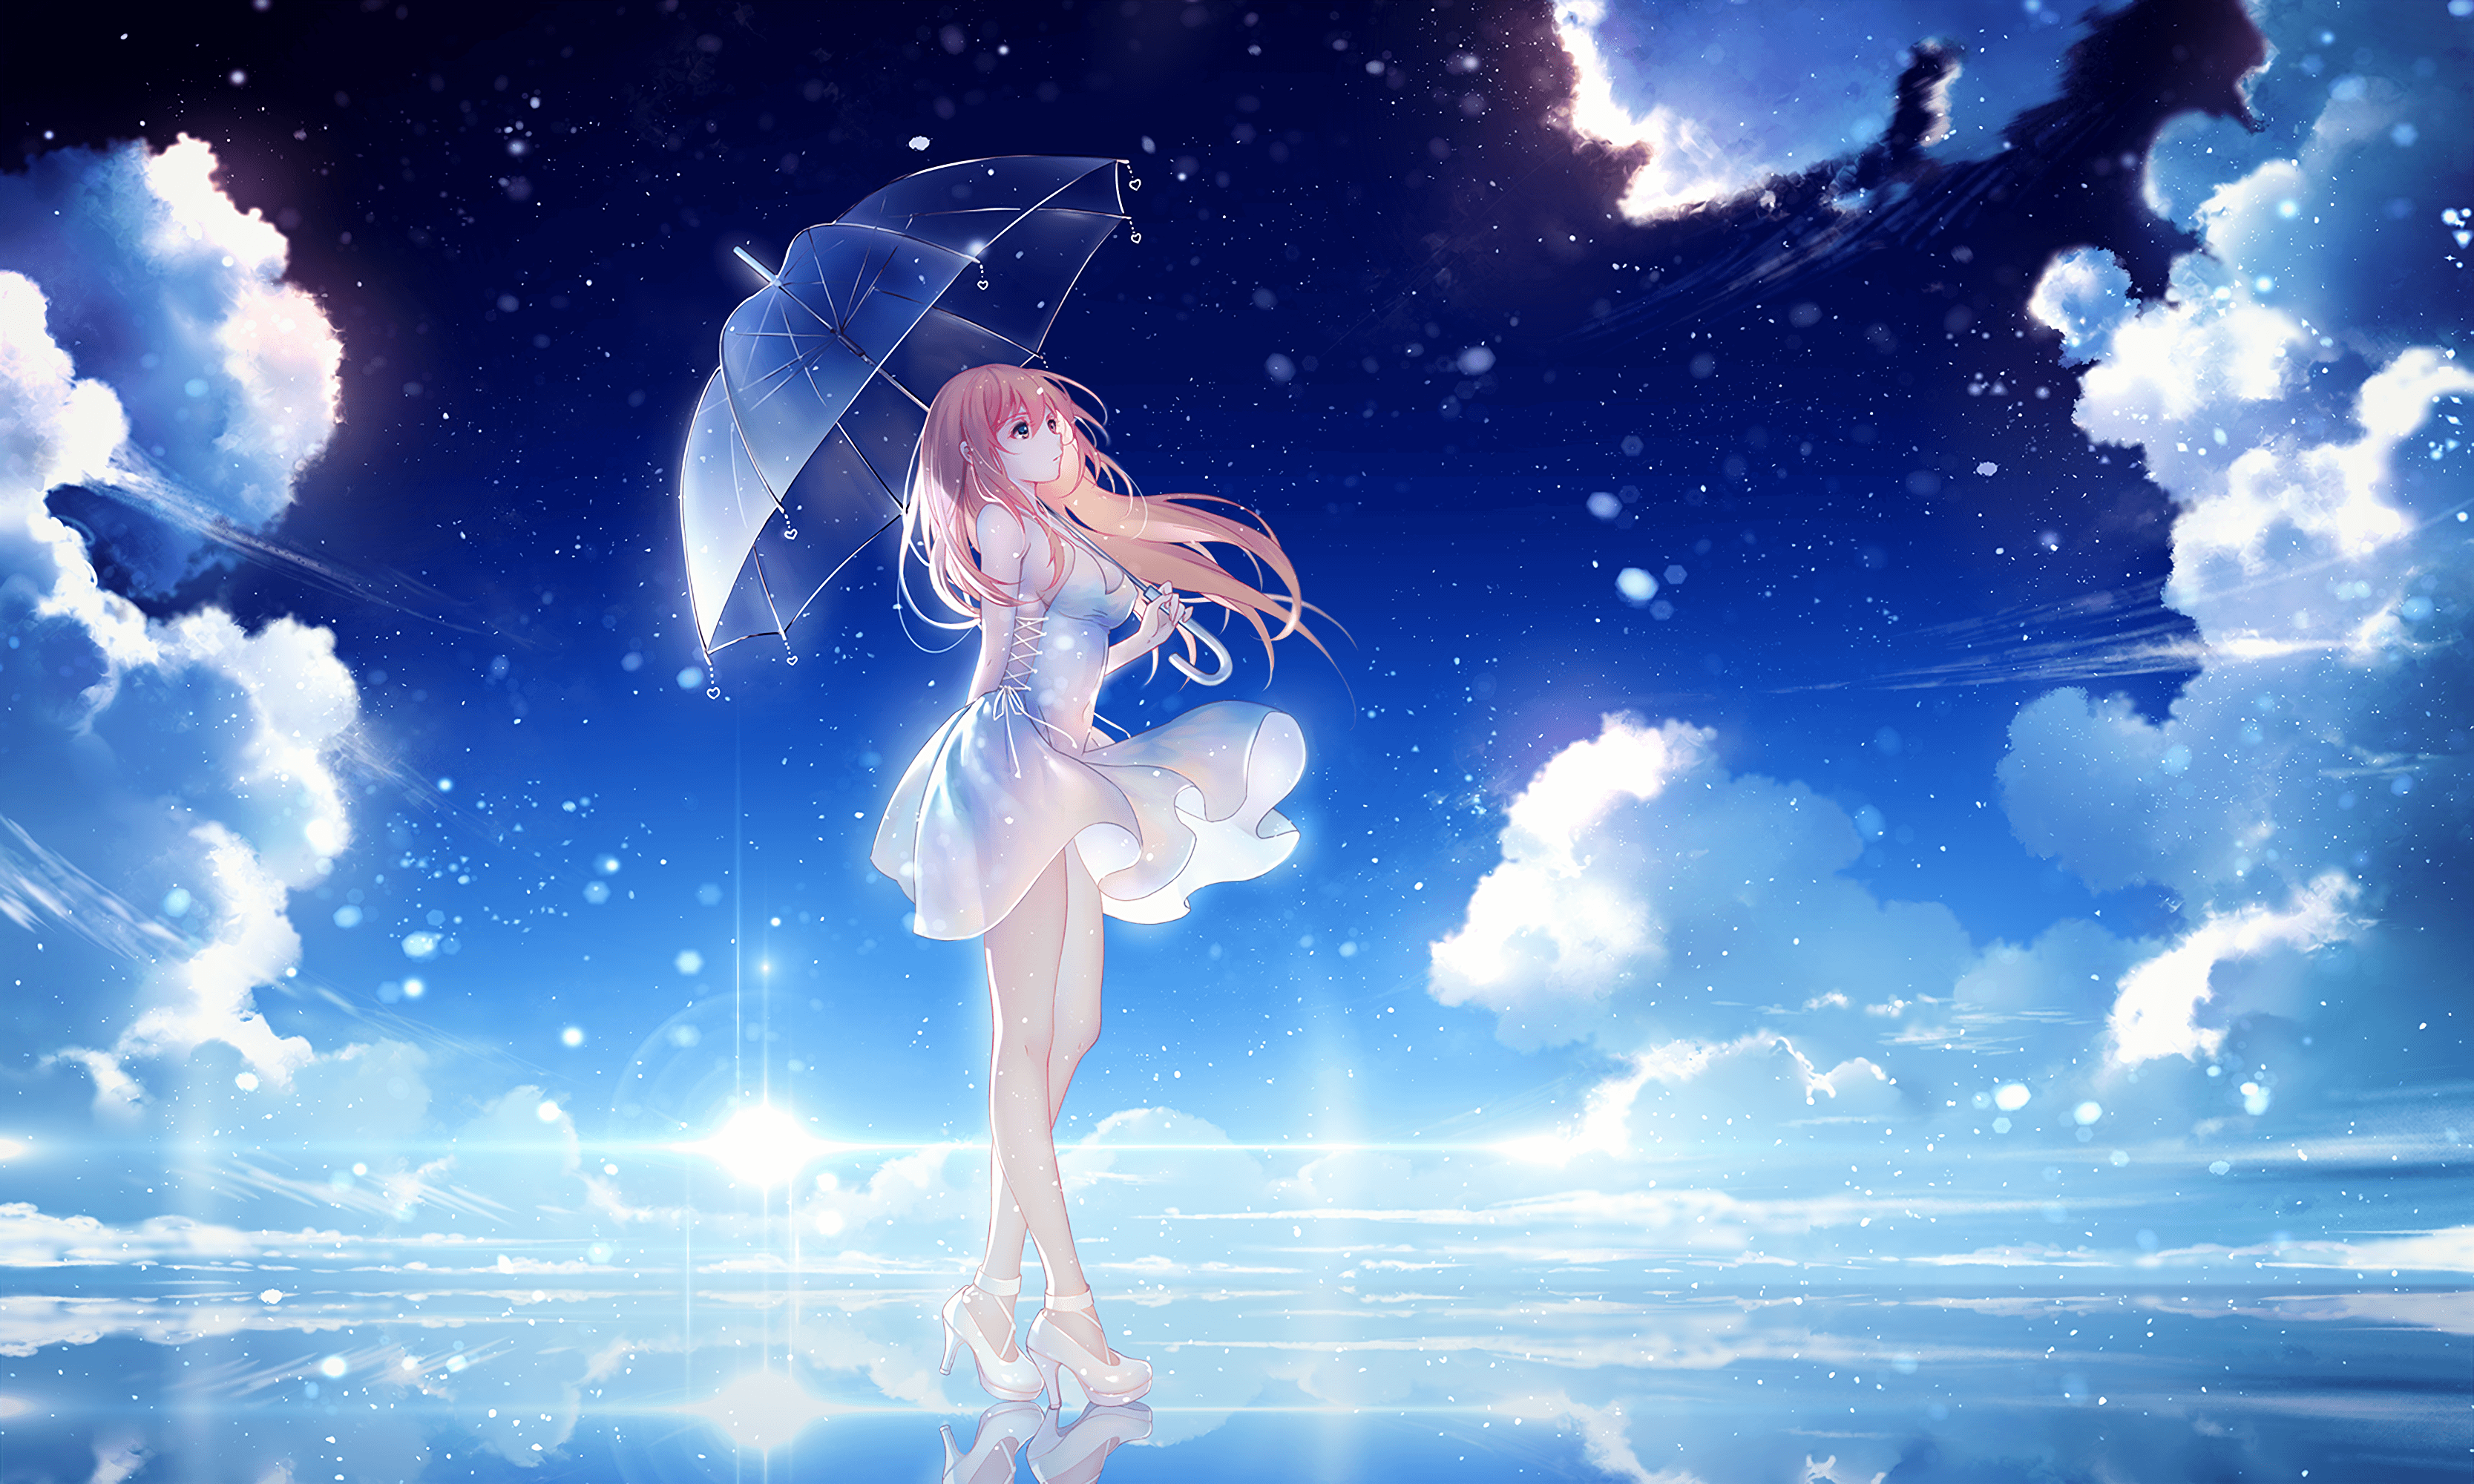 Anime Girl With Umbrella Wallpaper gambar ke 1